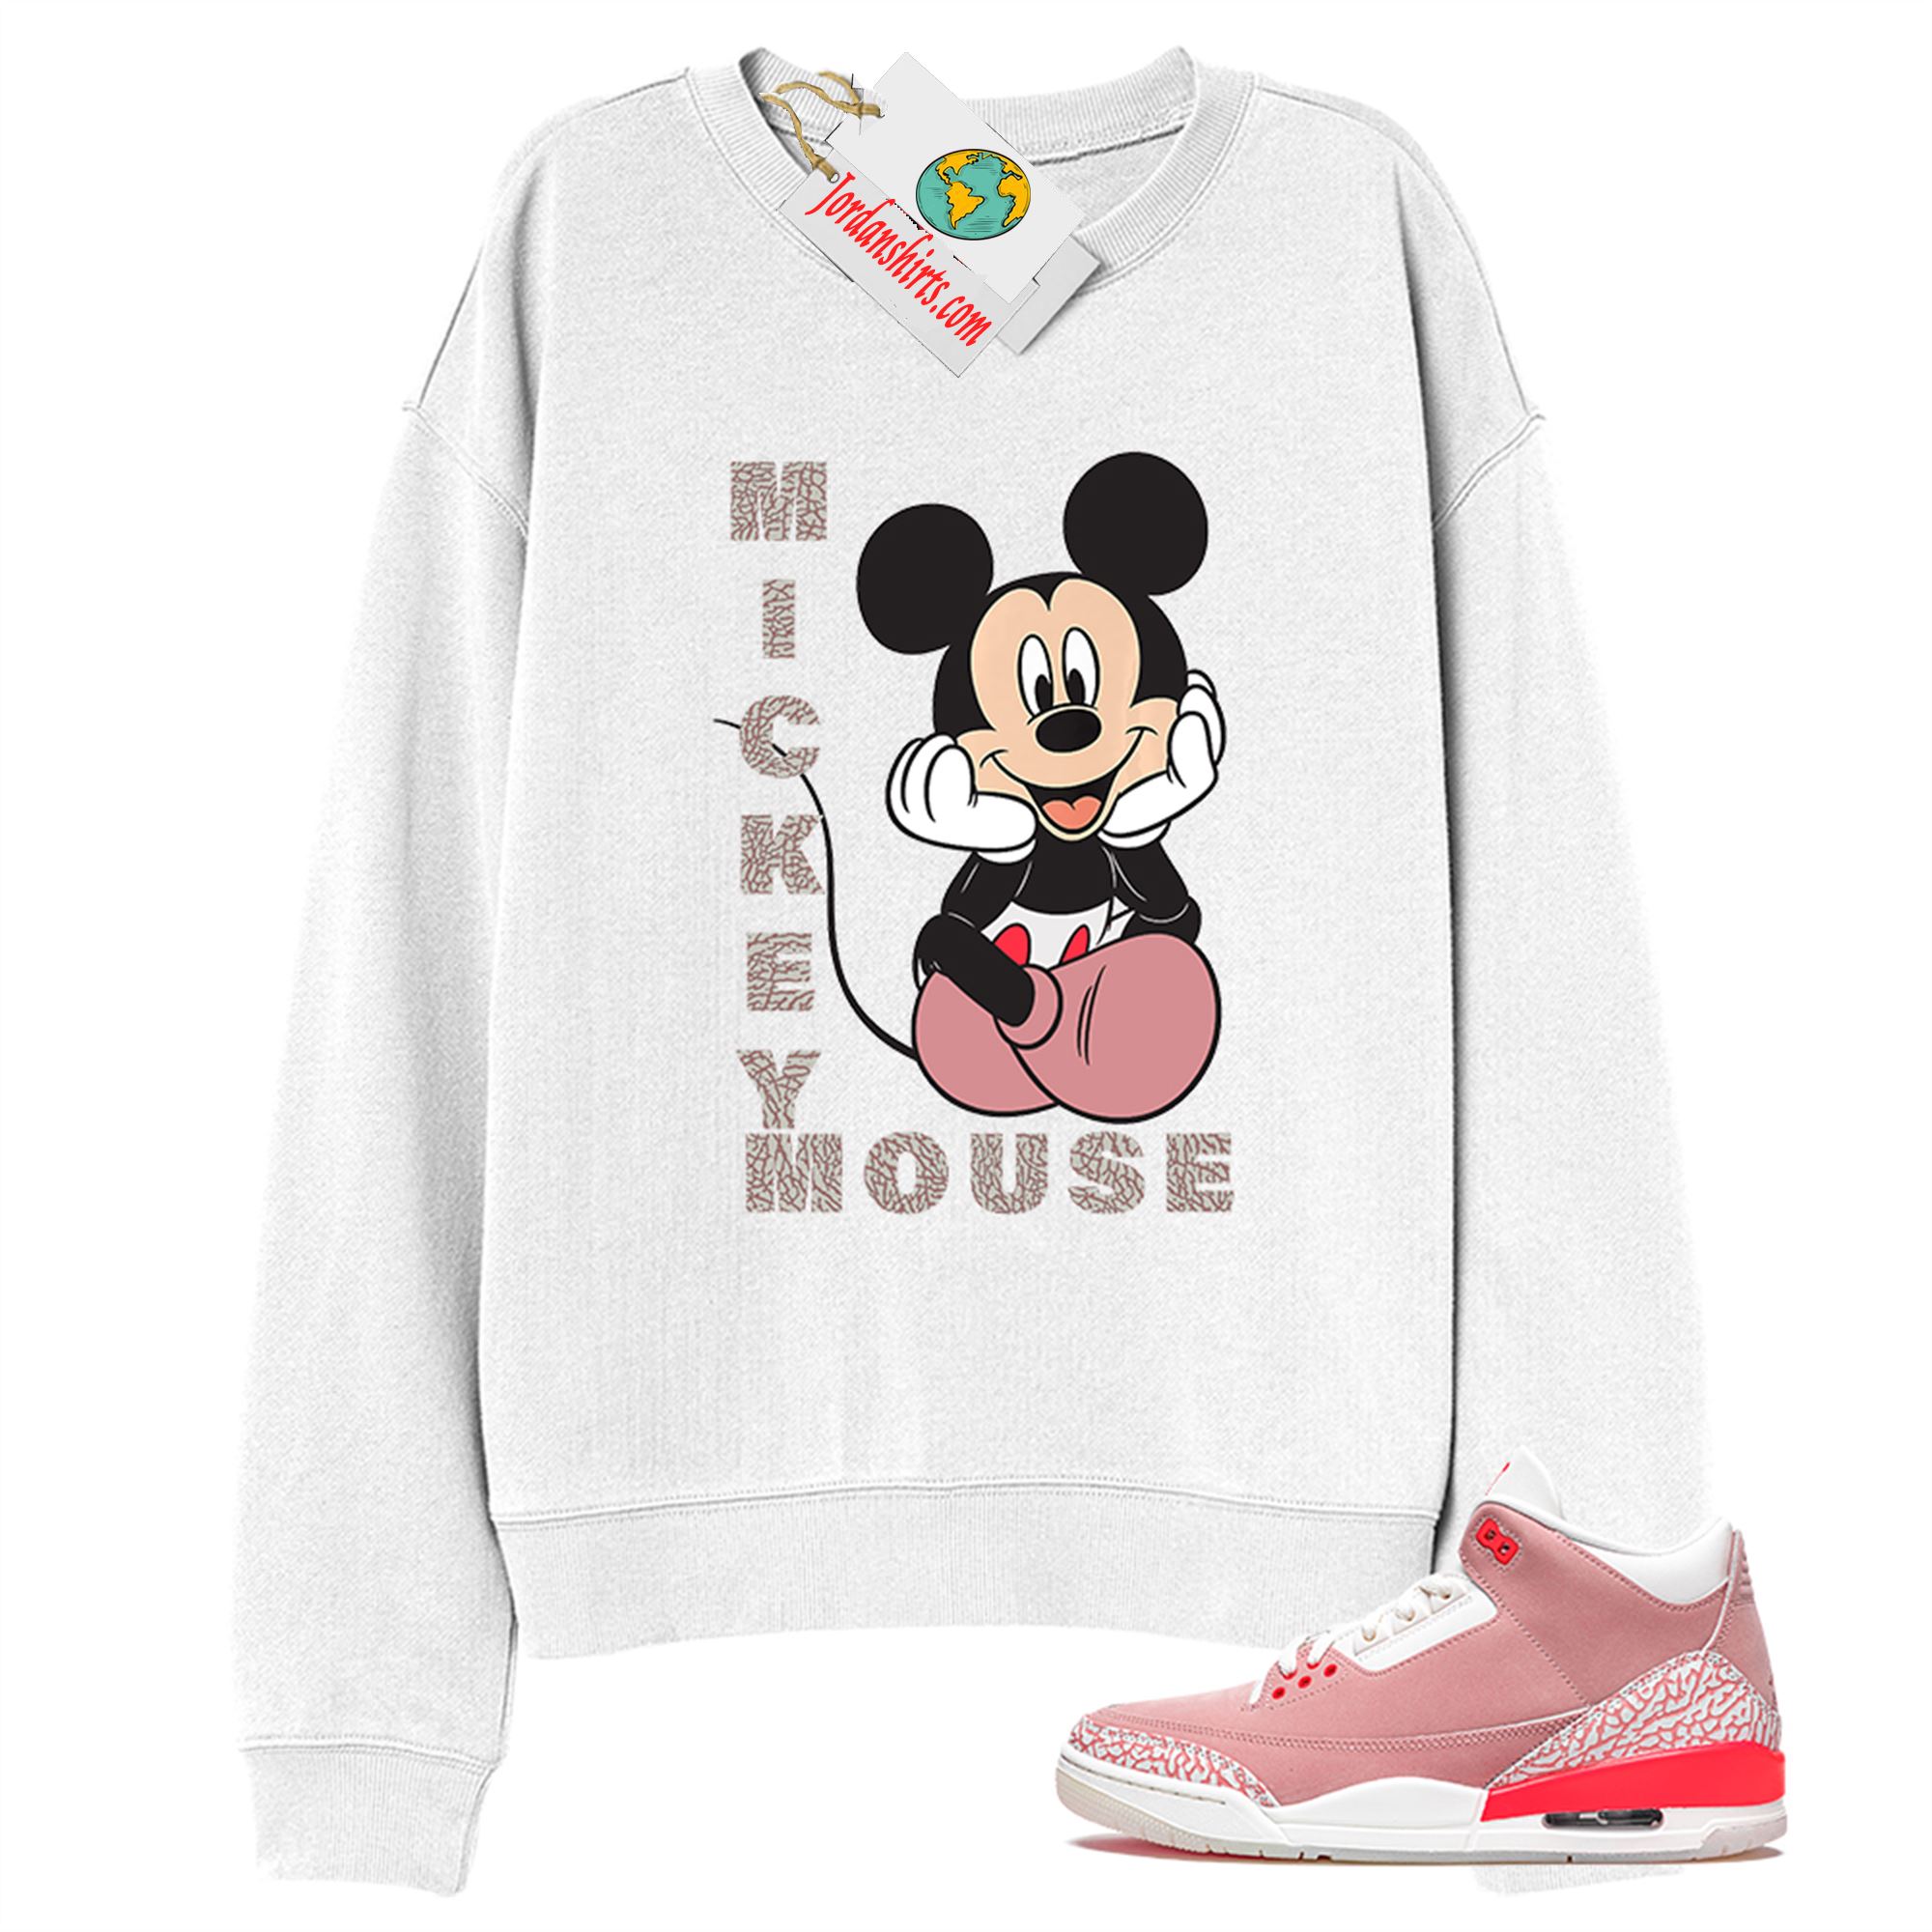 Jordan 3 Sweatshirt, Disney Mickey Mouse Hands In Face White Sweatshirt Air Jordan 3 Rust Pink 3s Size Up To 5xl